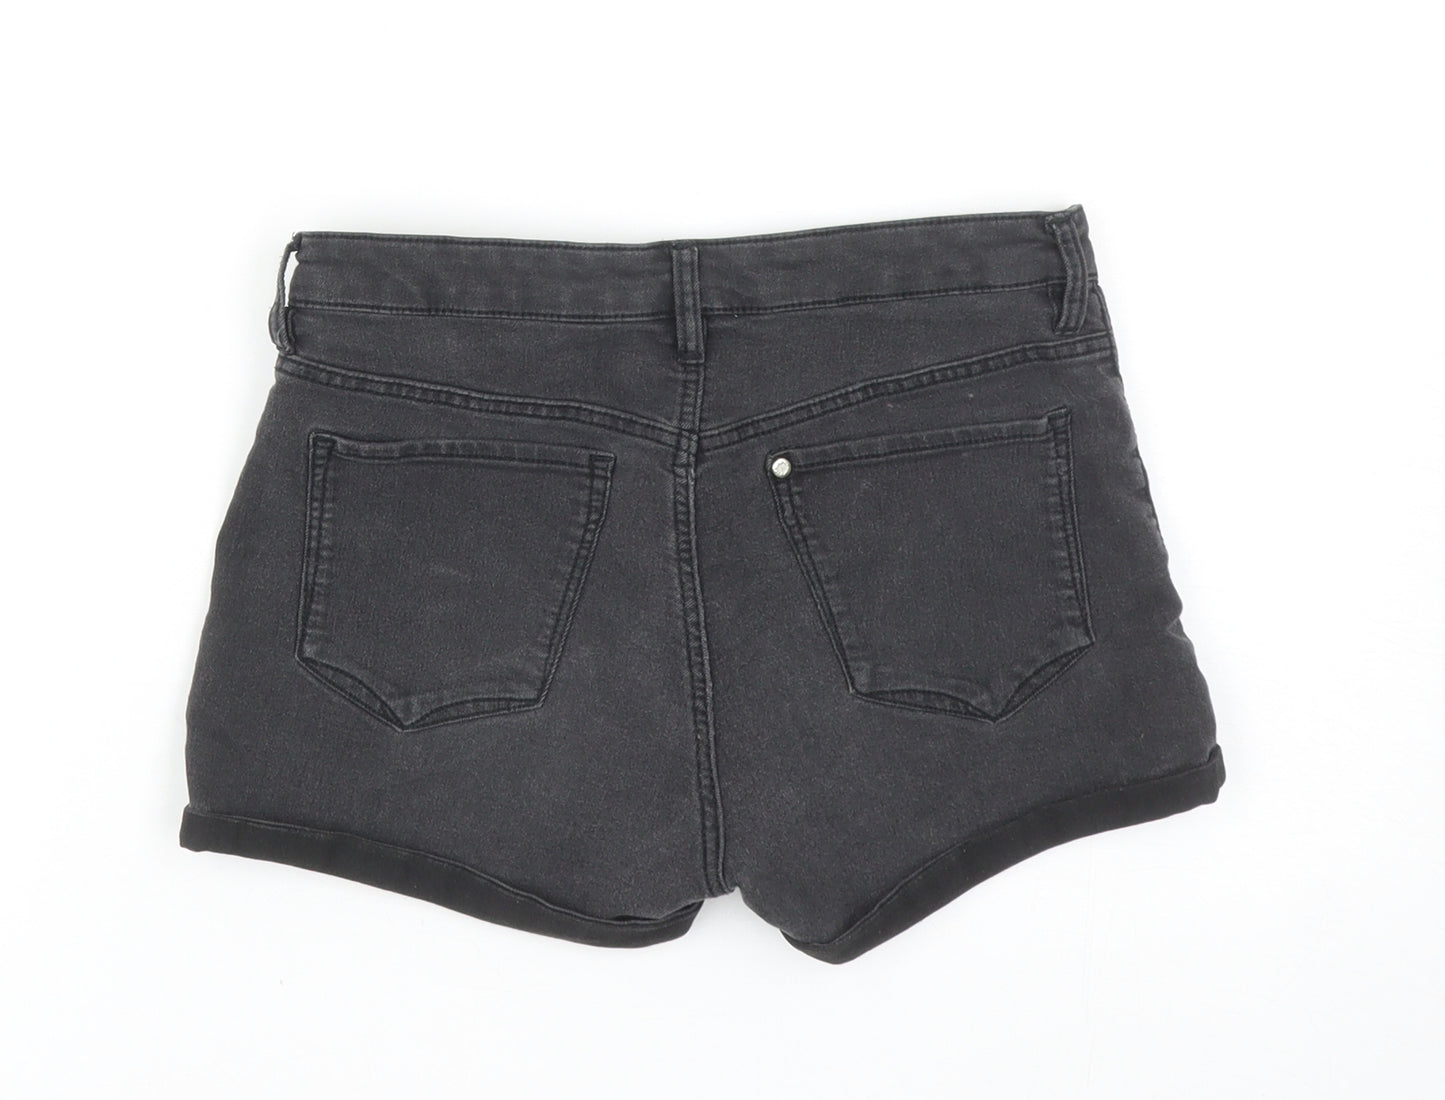 H&M Girls Black Cotton Hot Pants Shorts Size 12-13 Years L3 in Regular Zip